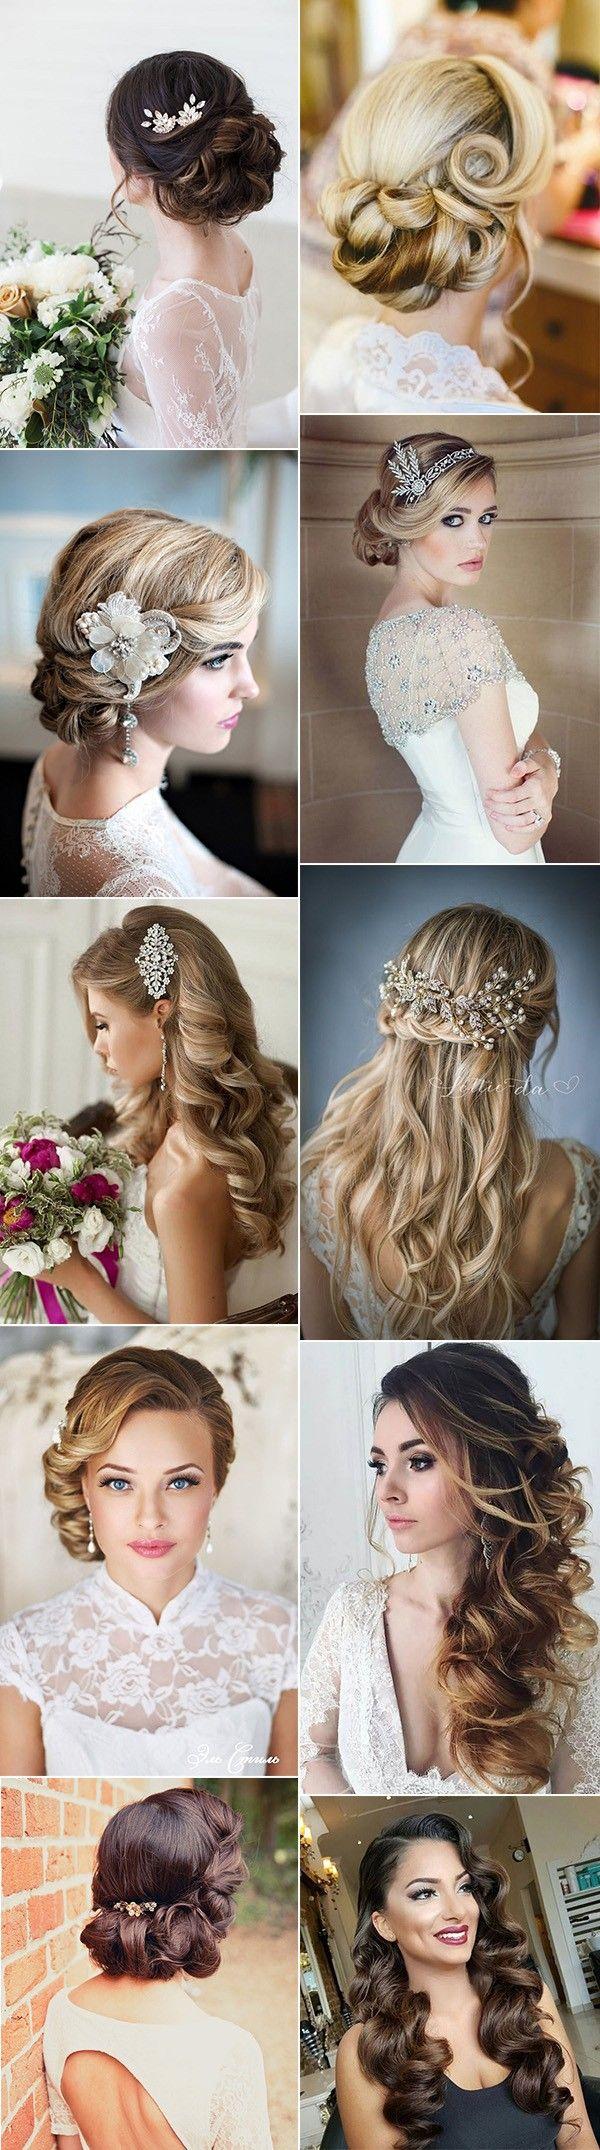 Wedding - Top 20 Vintage Wedding Hairstyles For Brides